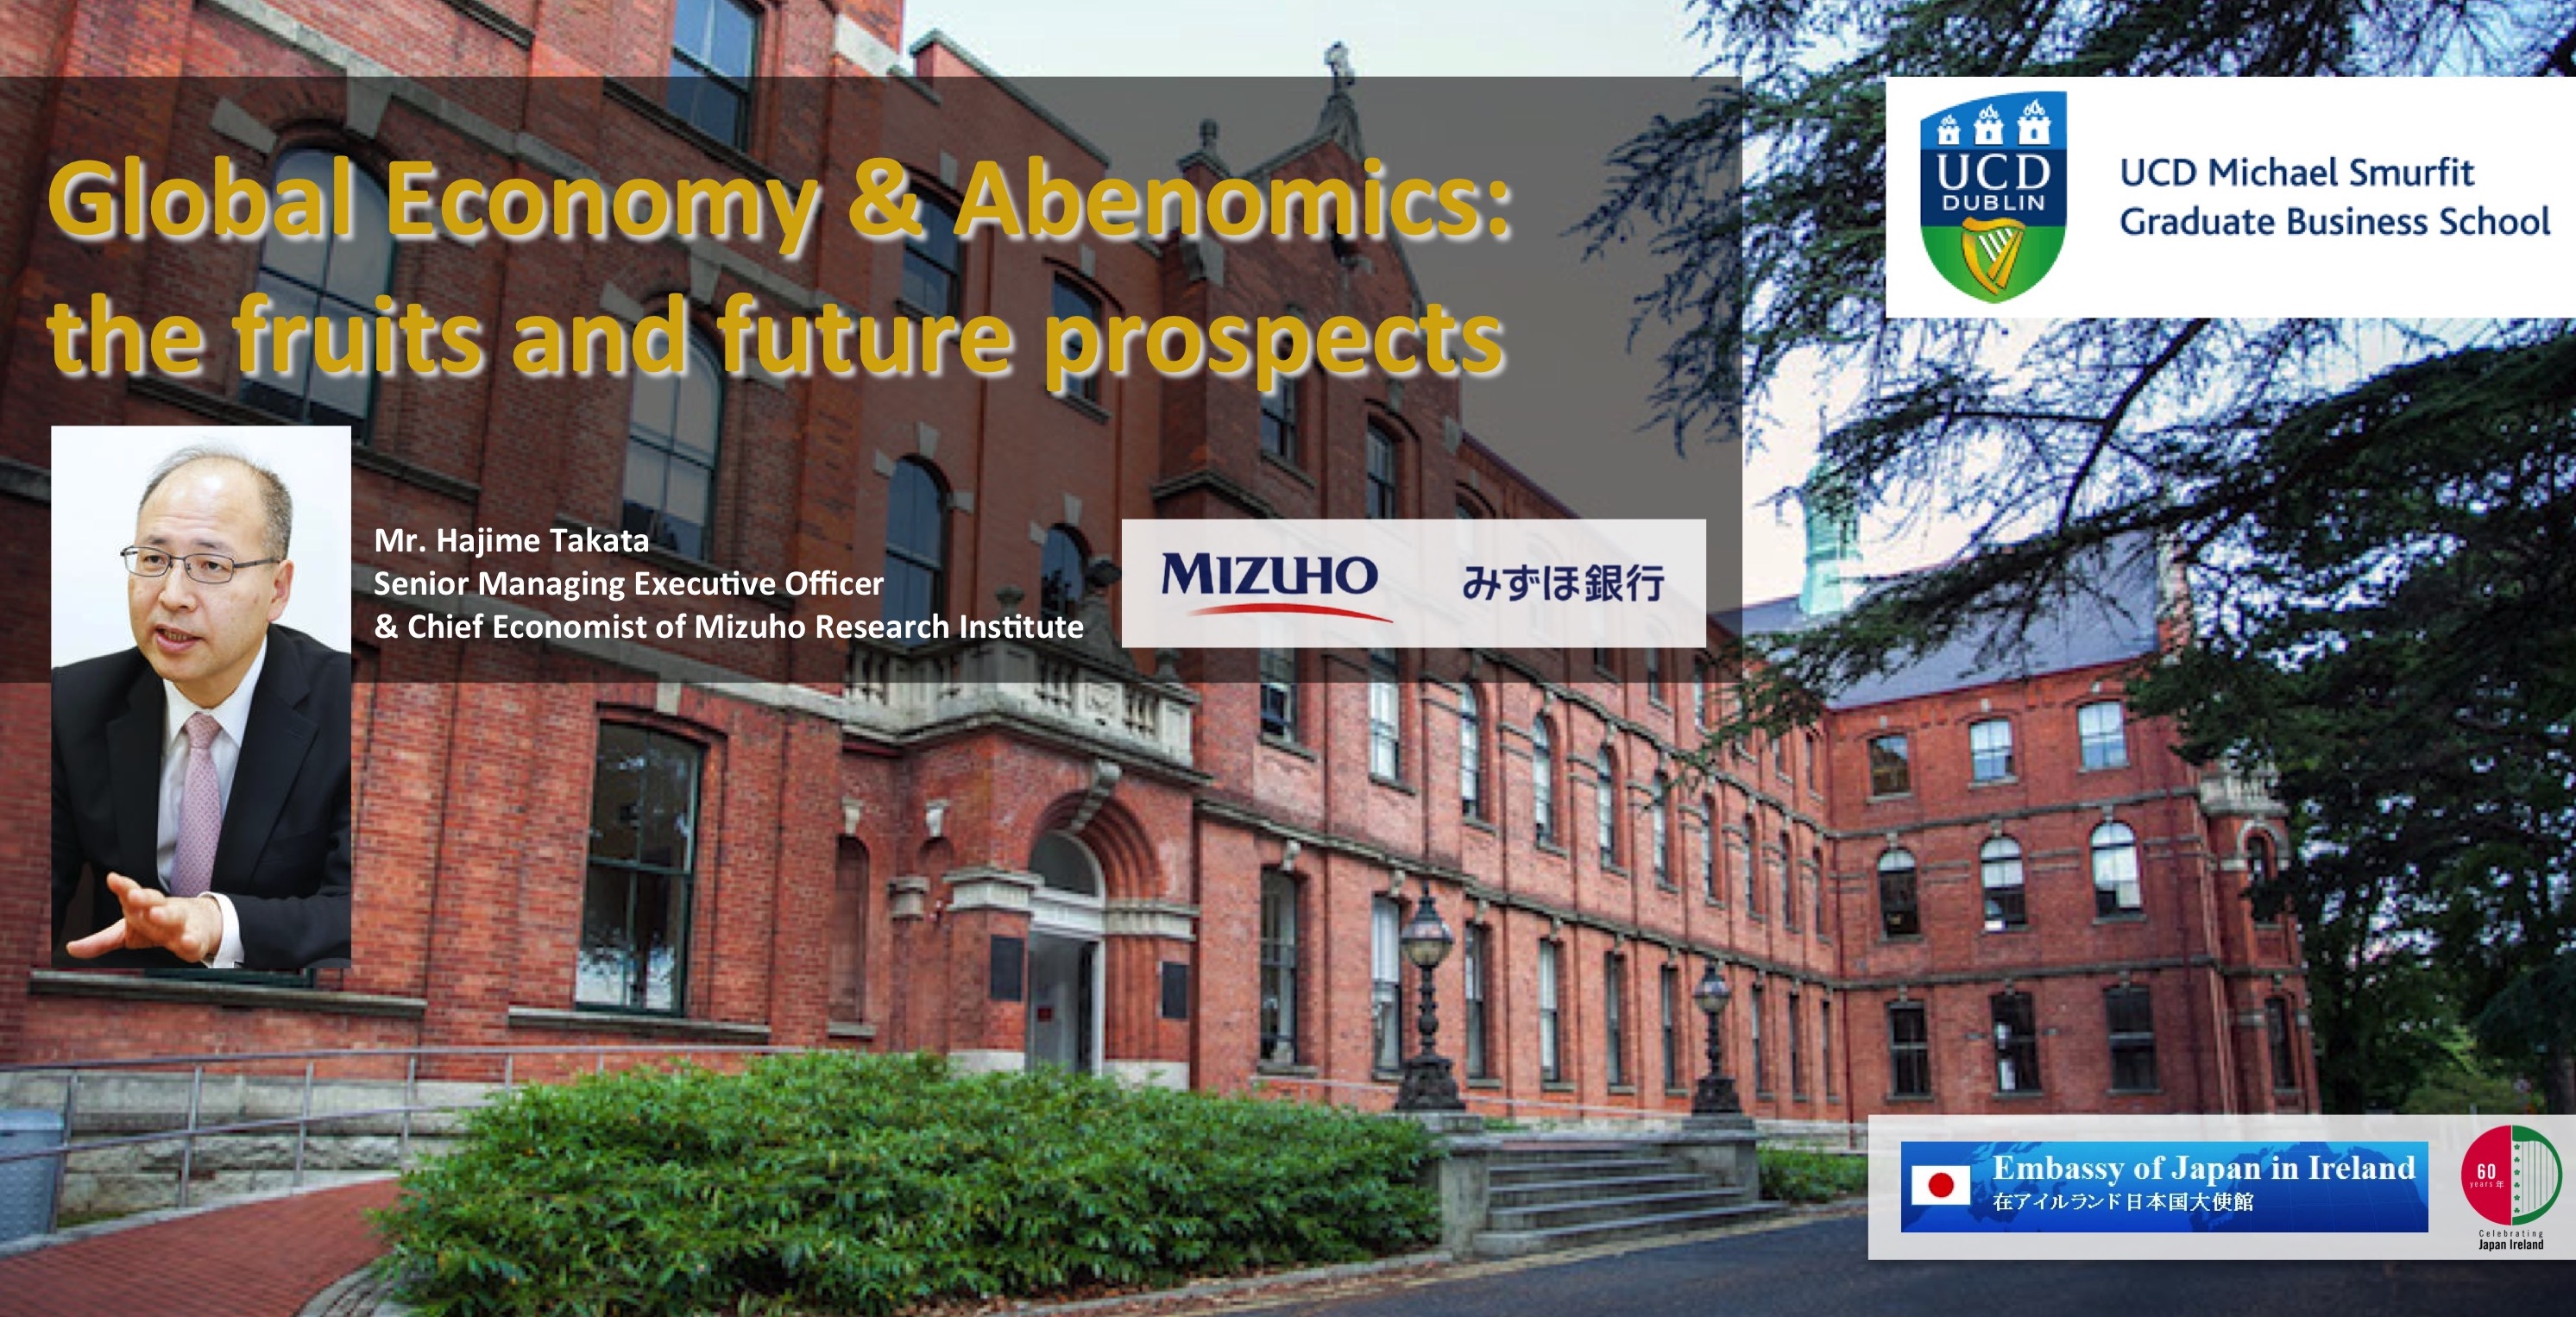 Seminar - Global Economy & Abenomics: the fruits & future prospects
